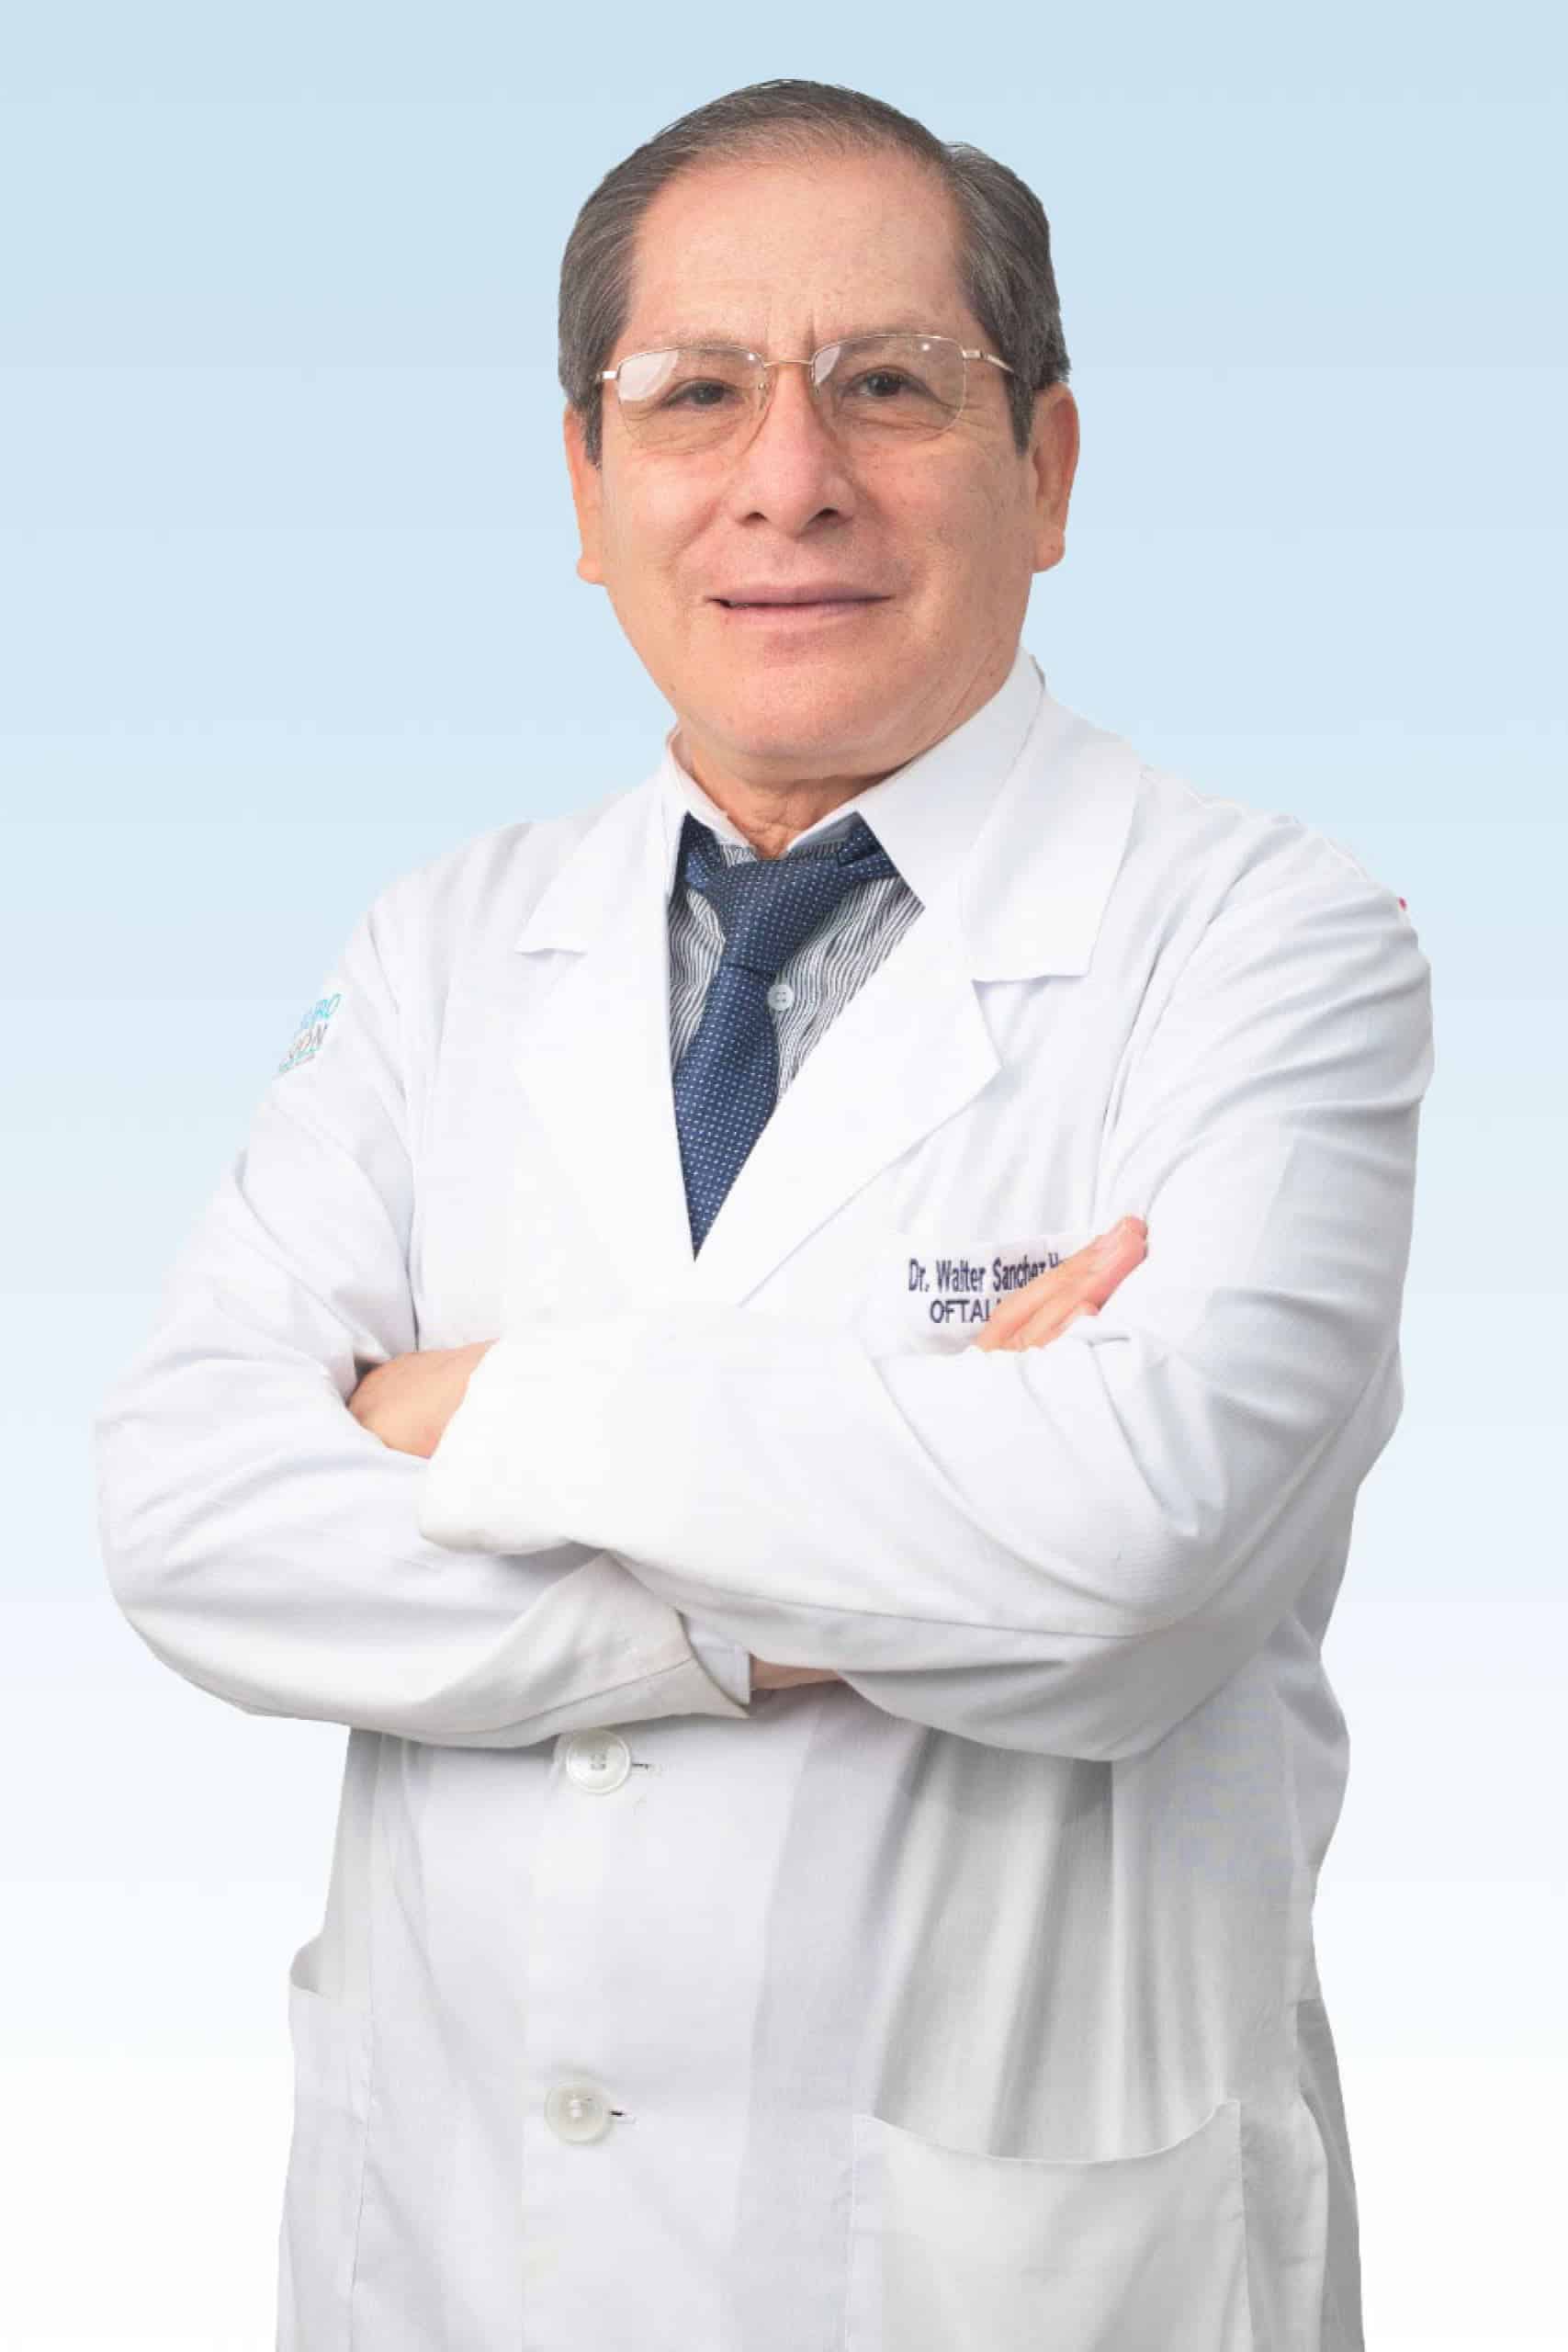 Dr. Walter Sánchez Humala